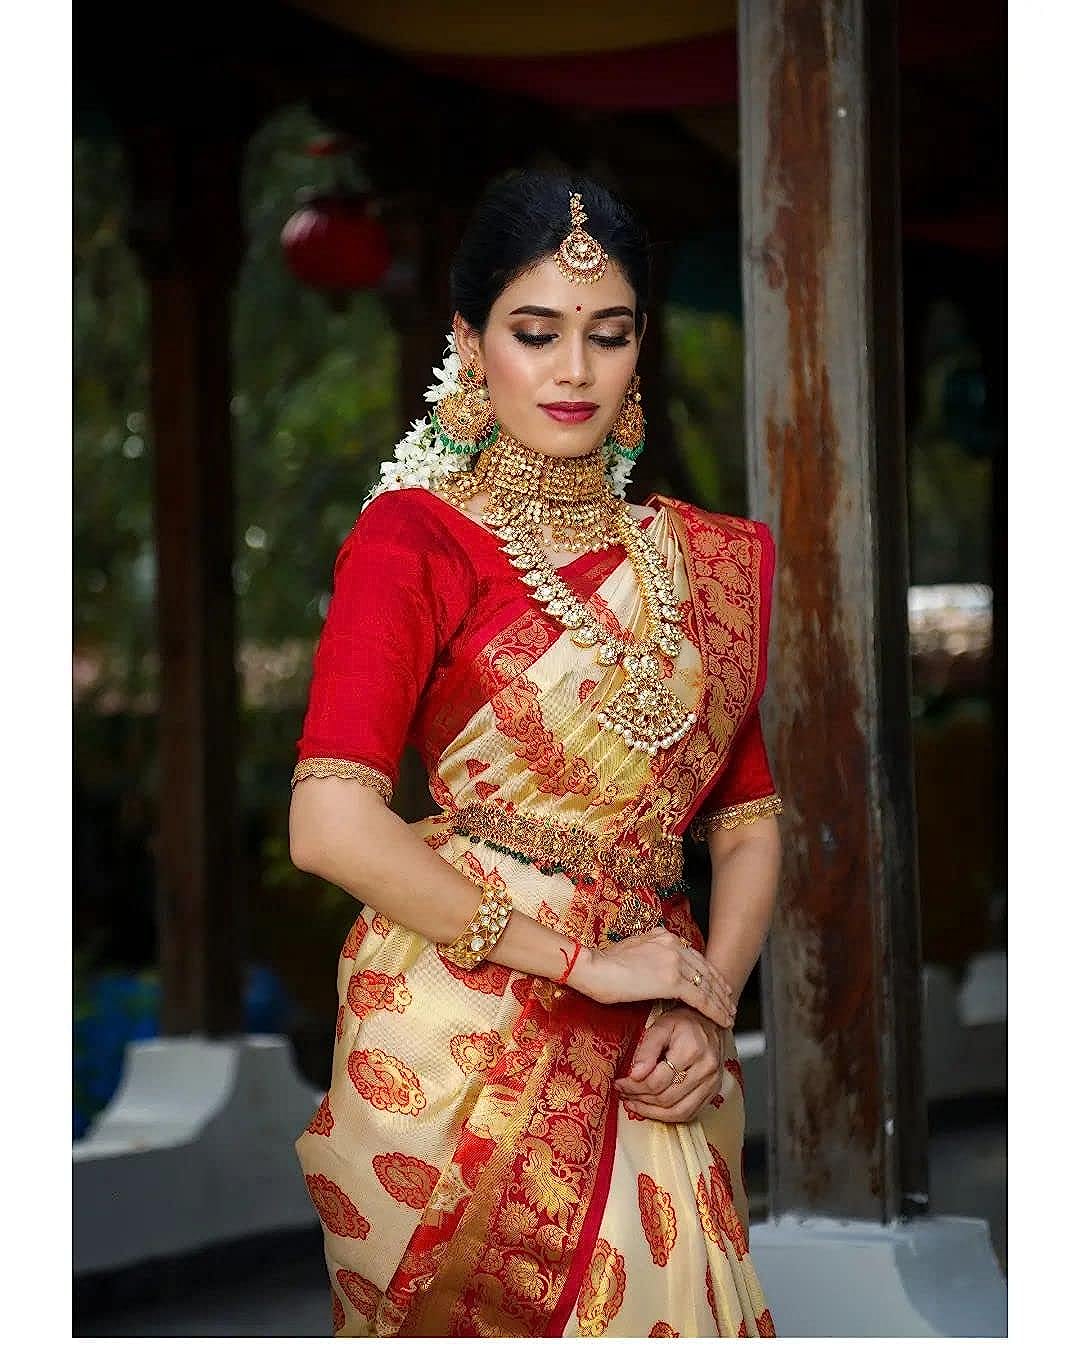 White Color Heavy Zari Weaving Kanjivaram Soft Silk Jacquard Saree